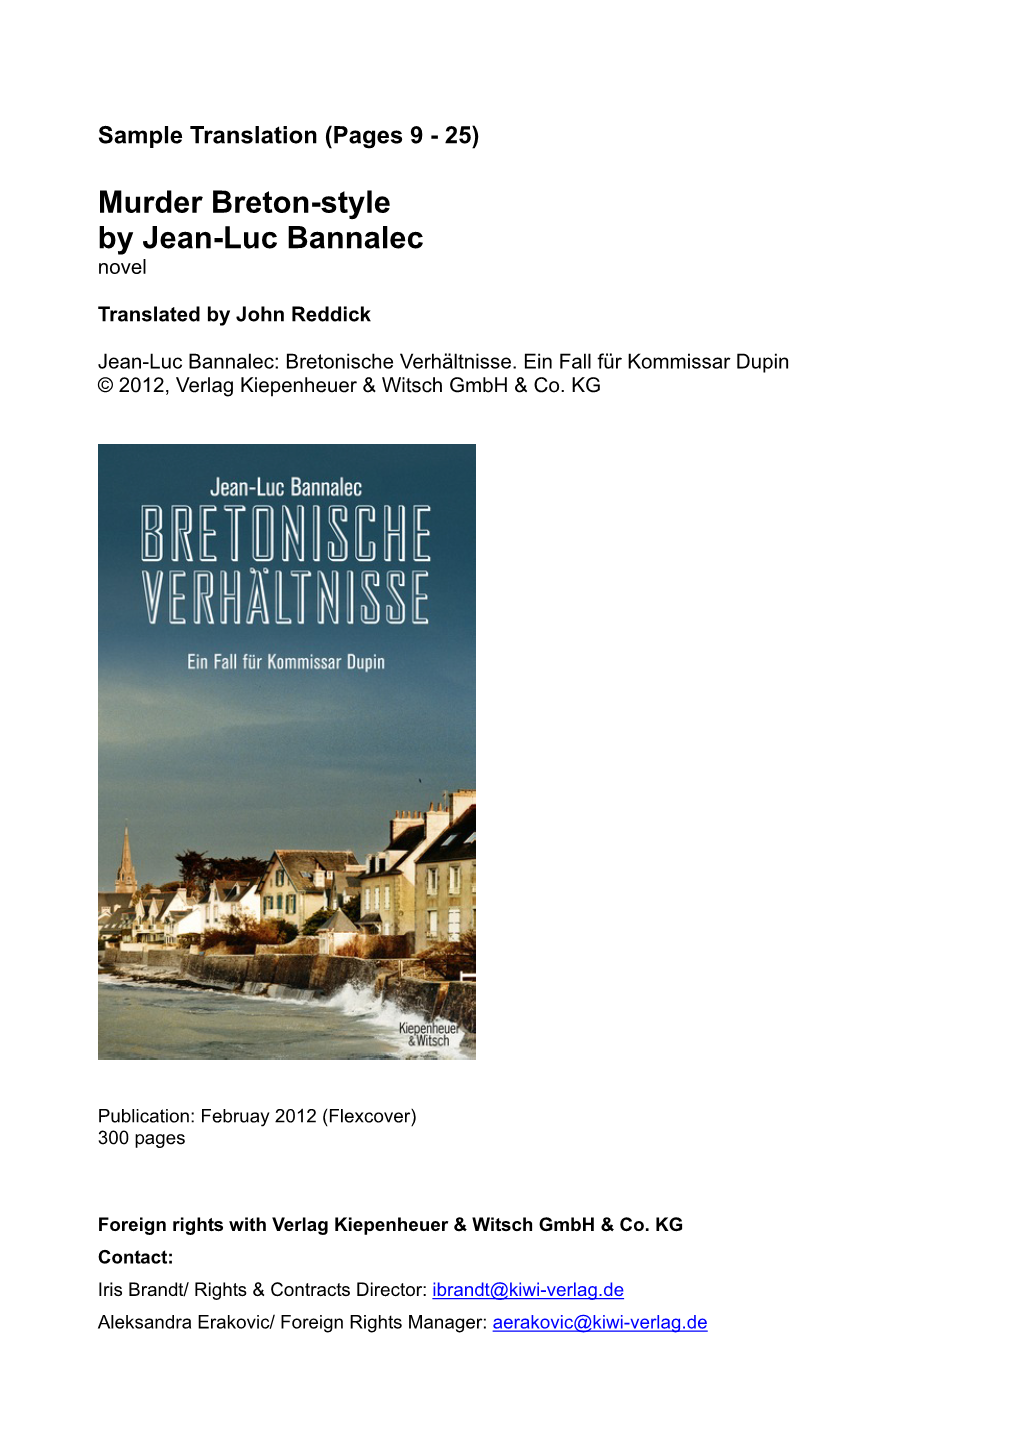 Murder Breton-Style by Jean-Luc Bannalec Novel